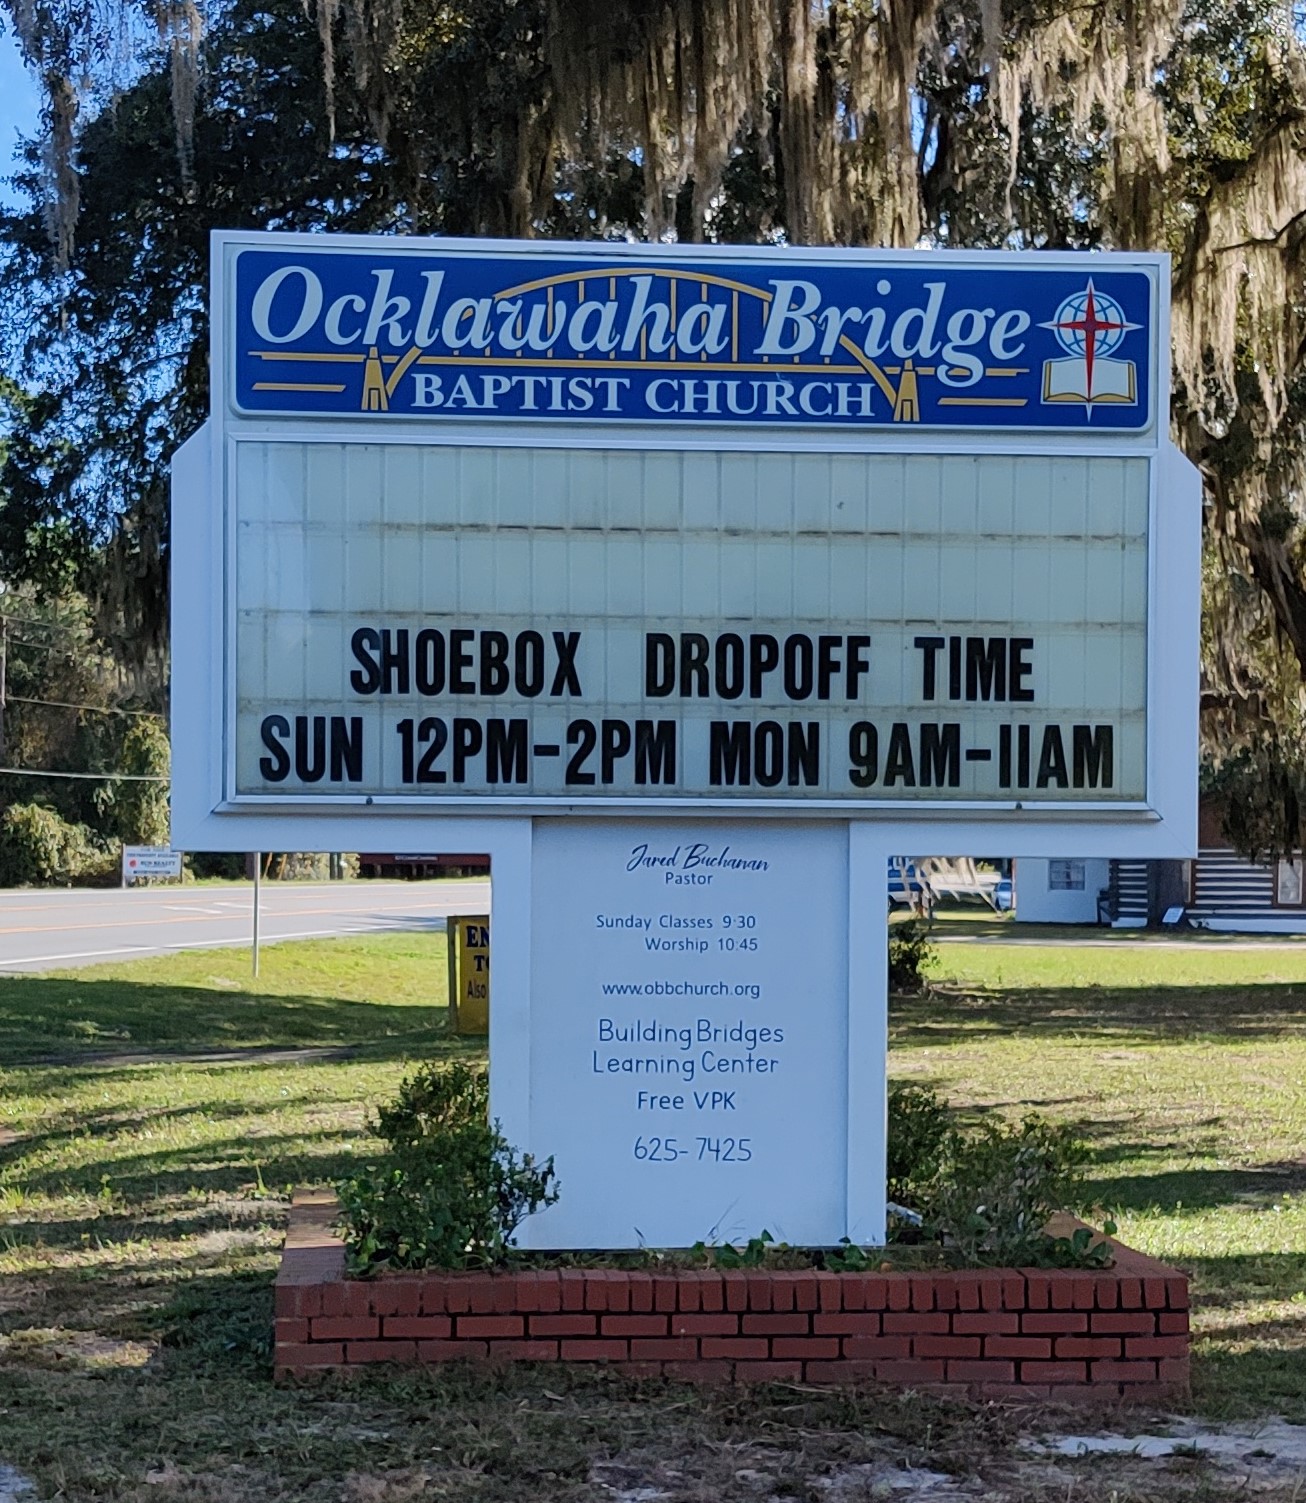 Ocklawaha Bridge Baptist Church